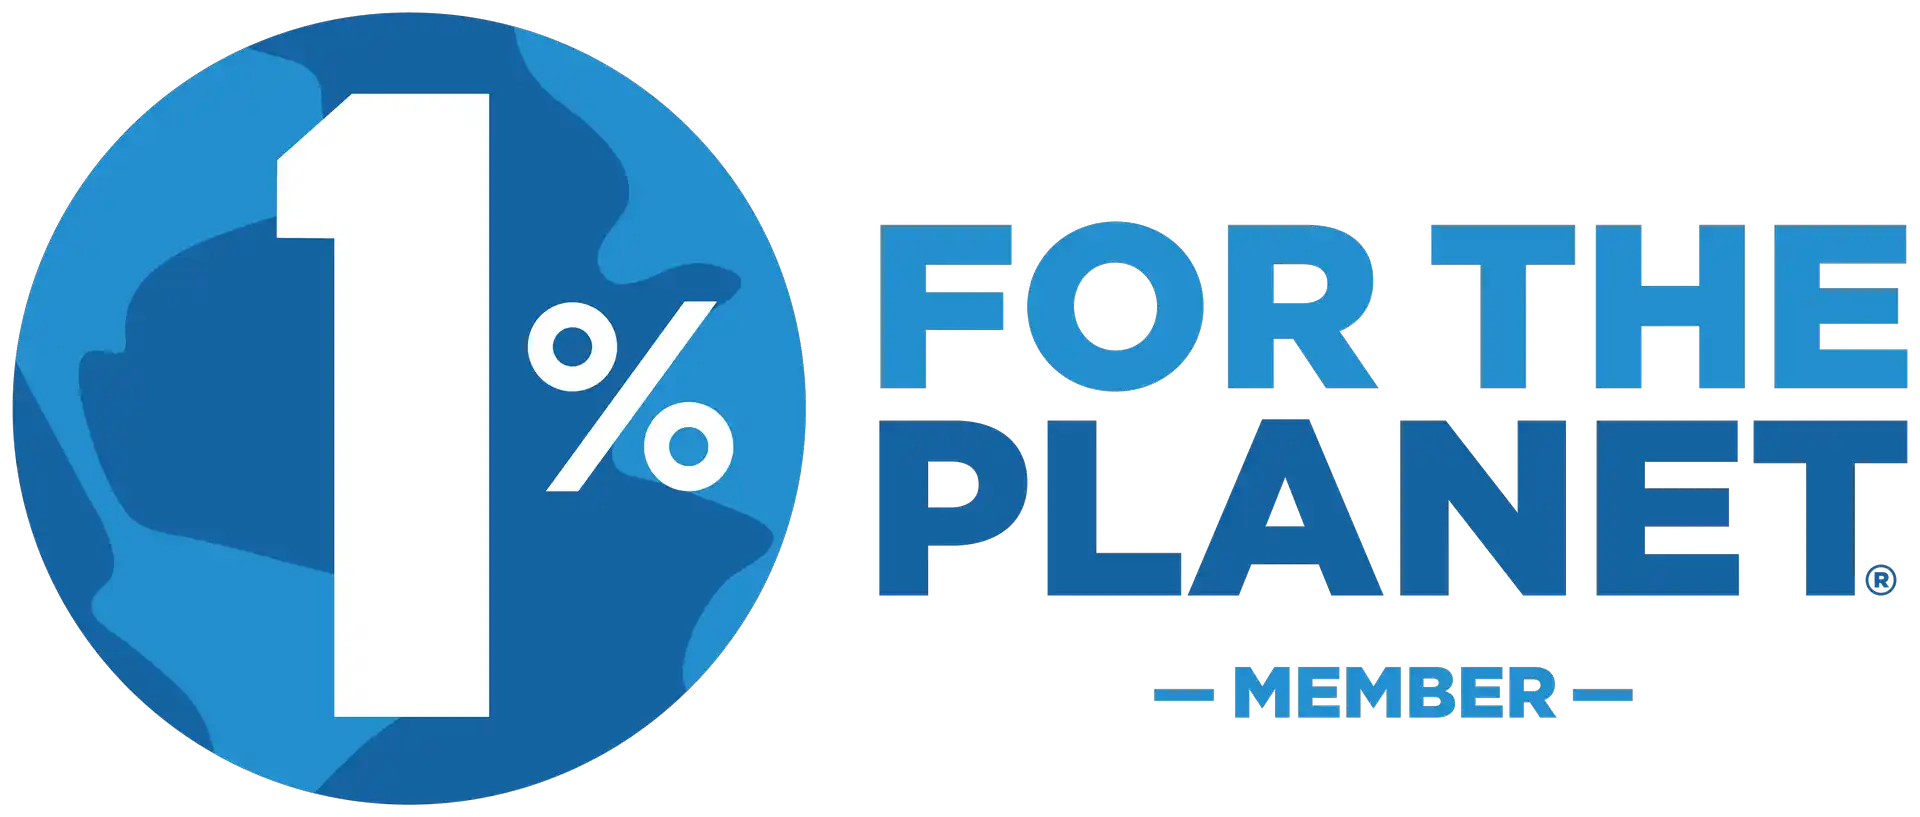 Blue 1 Percent for the Planet Member logo.